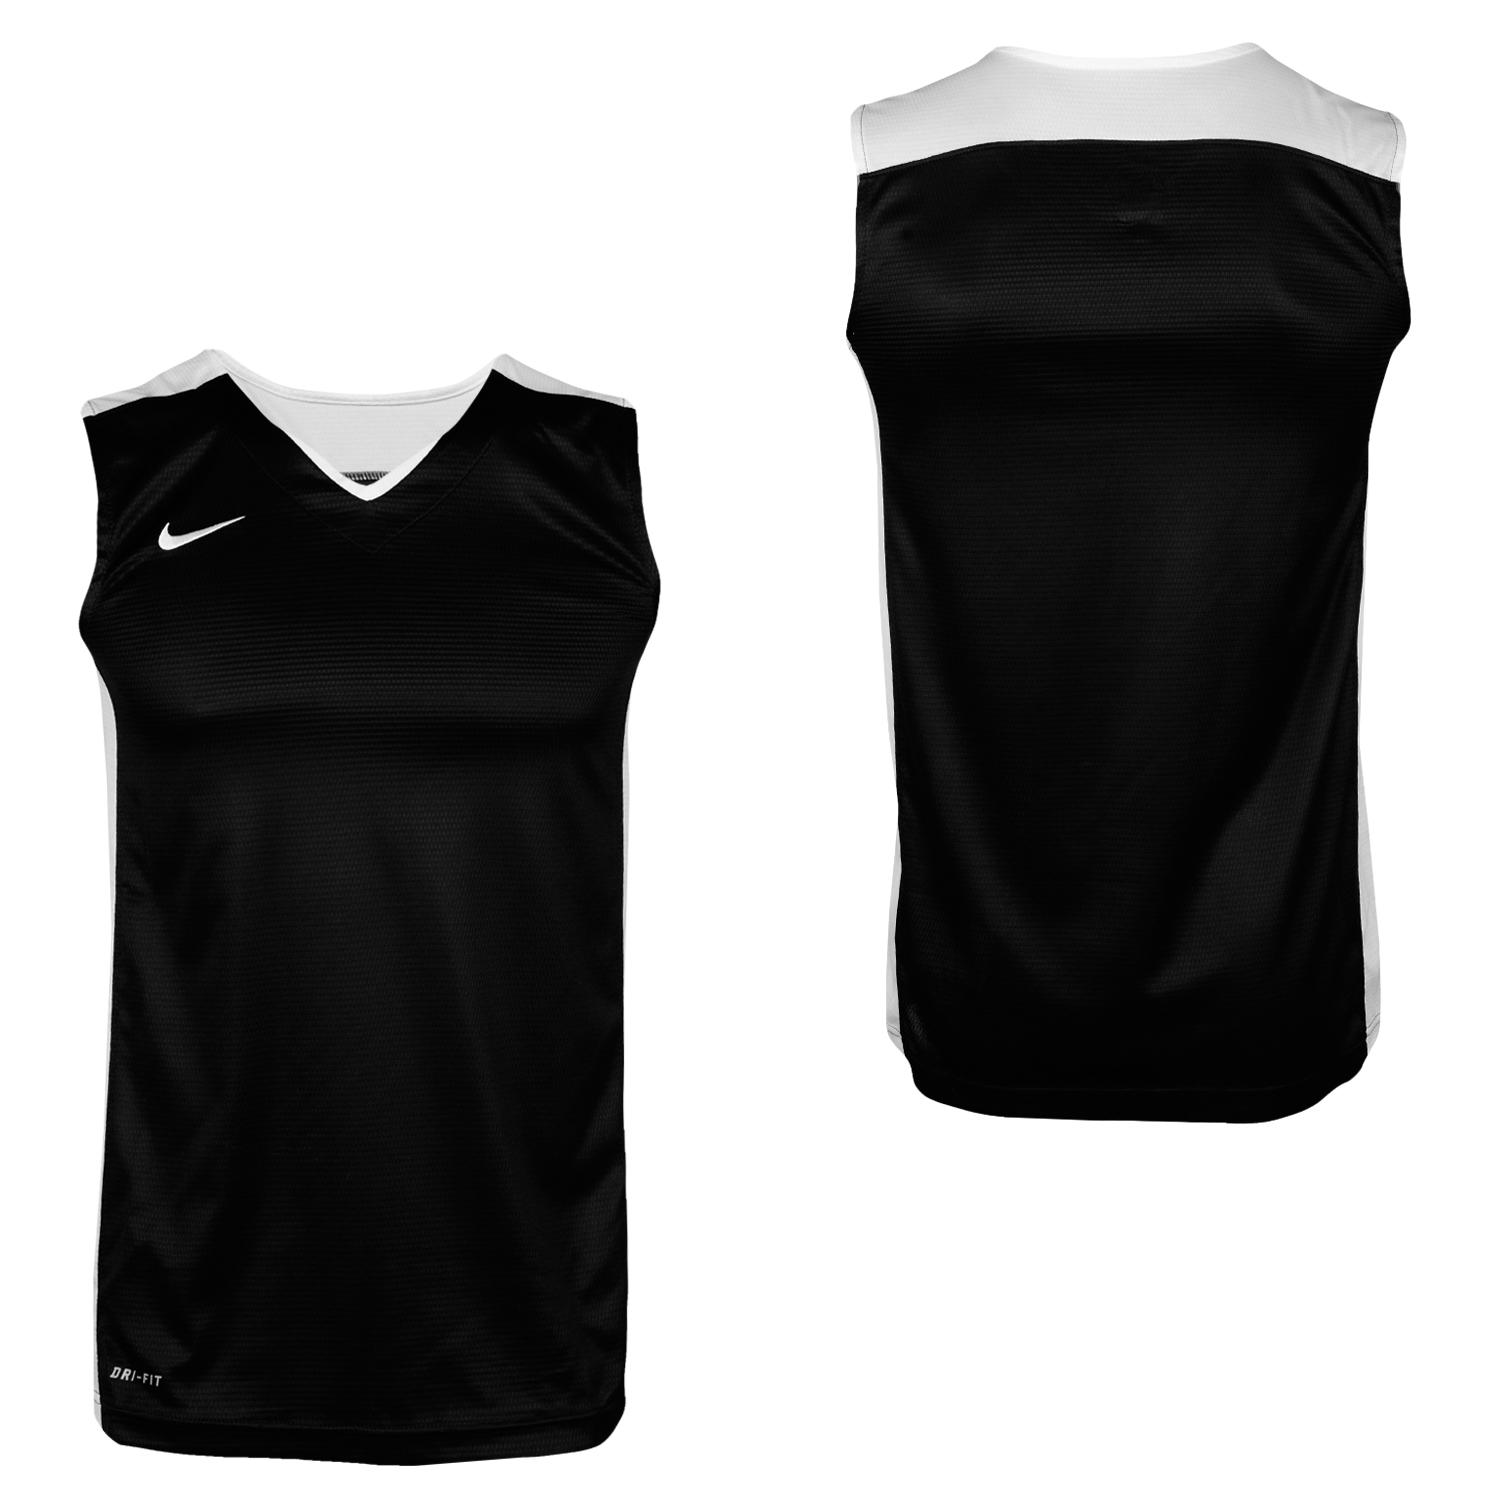 Foto Nike Post Up Sleeveless Hombres Camisetas Negro Blanco foto 471606